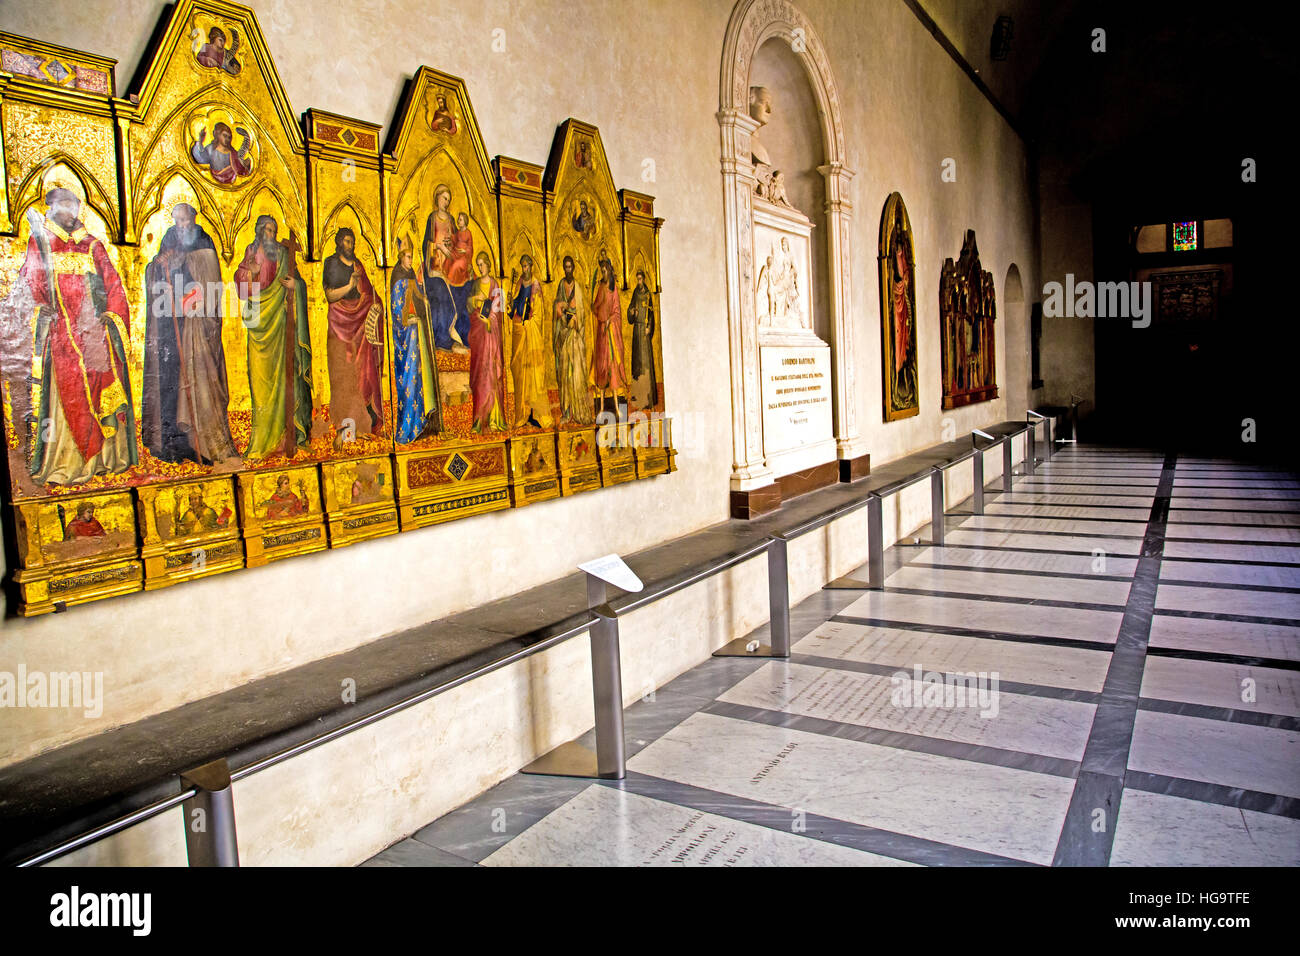 The Sacristy Corridor of Santa Croce Basilica in Florence Italy Stock Photo